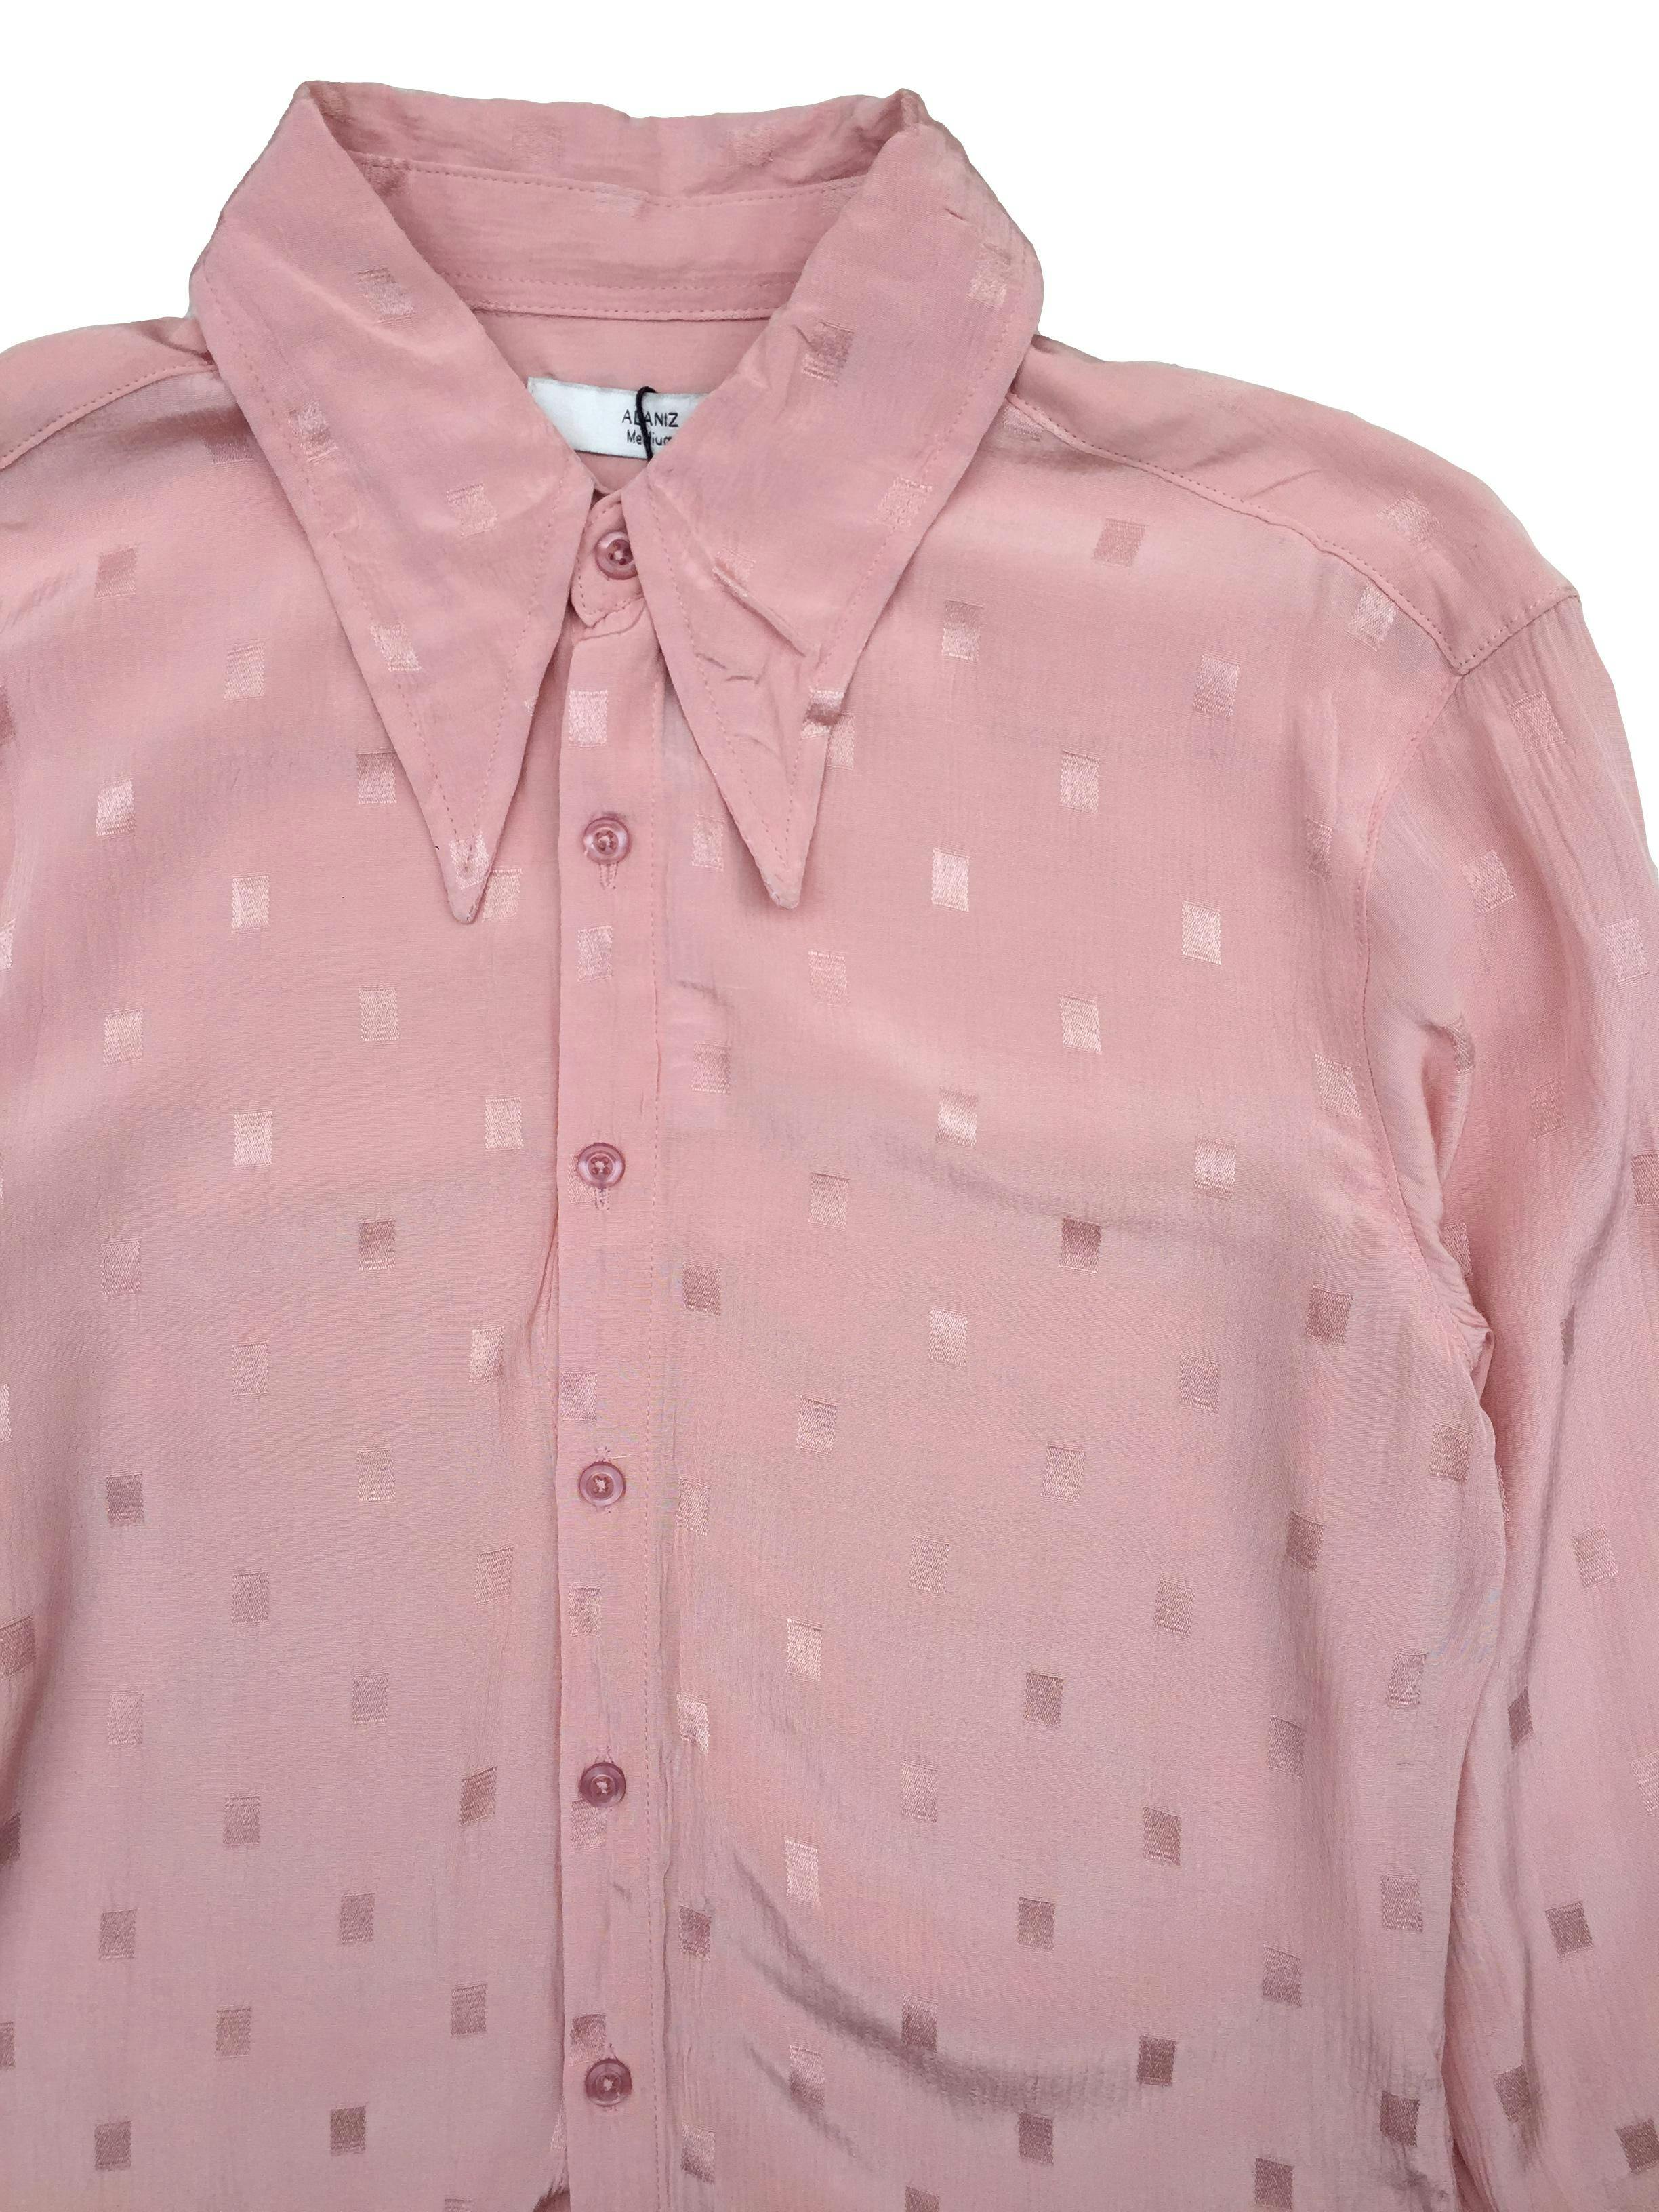 Blusa Alaniz palo rosa, tela viscosa. Busto: 96cm, Largo: 64cm. Nuevo con etiqueta.